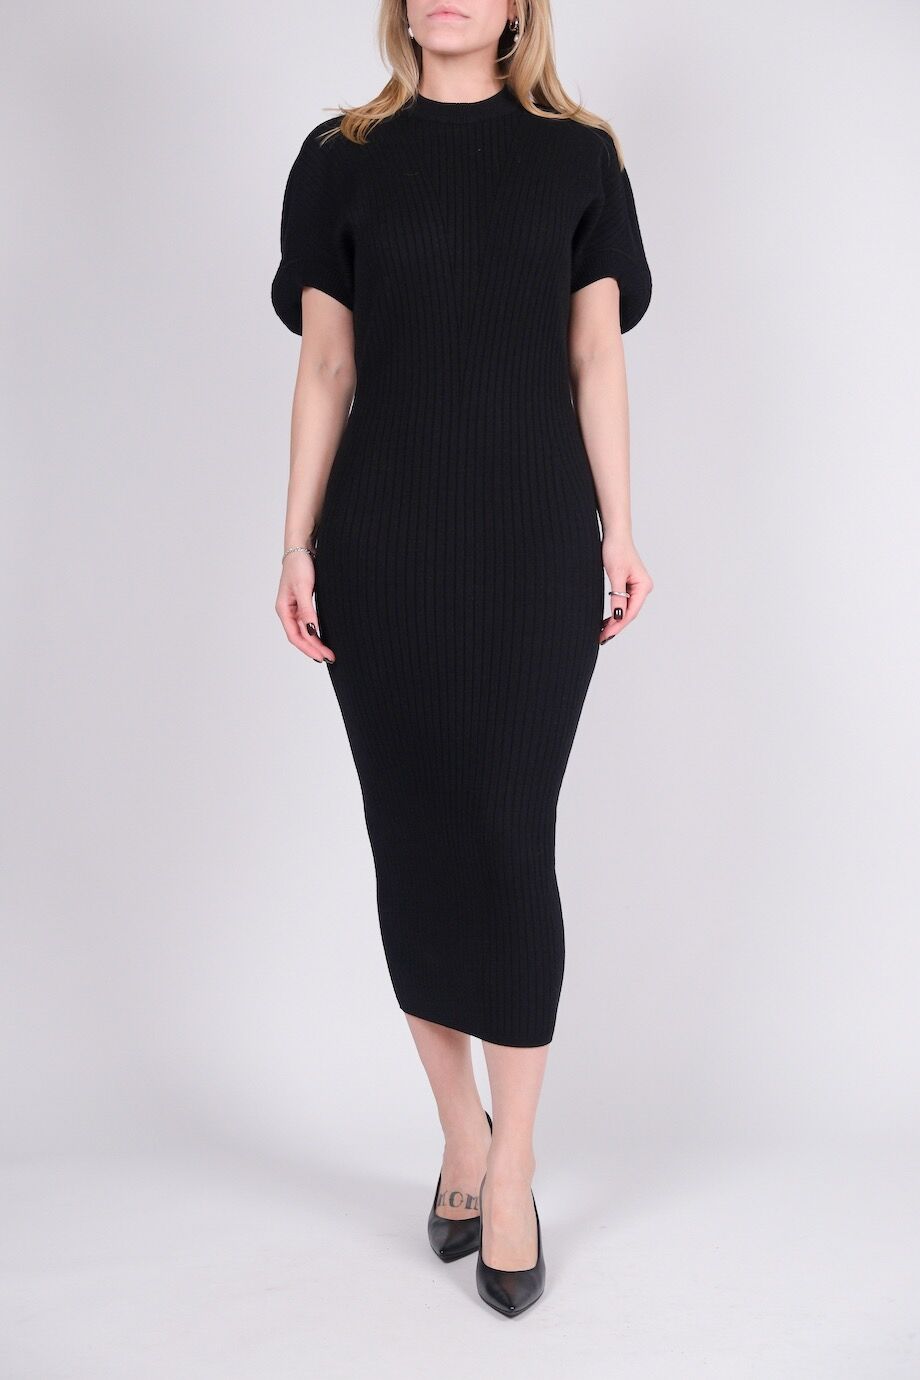 image 1 Трикотажное платье черного цвета с коротким рукавом